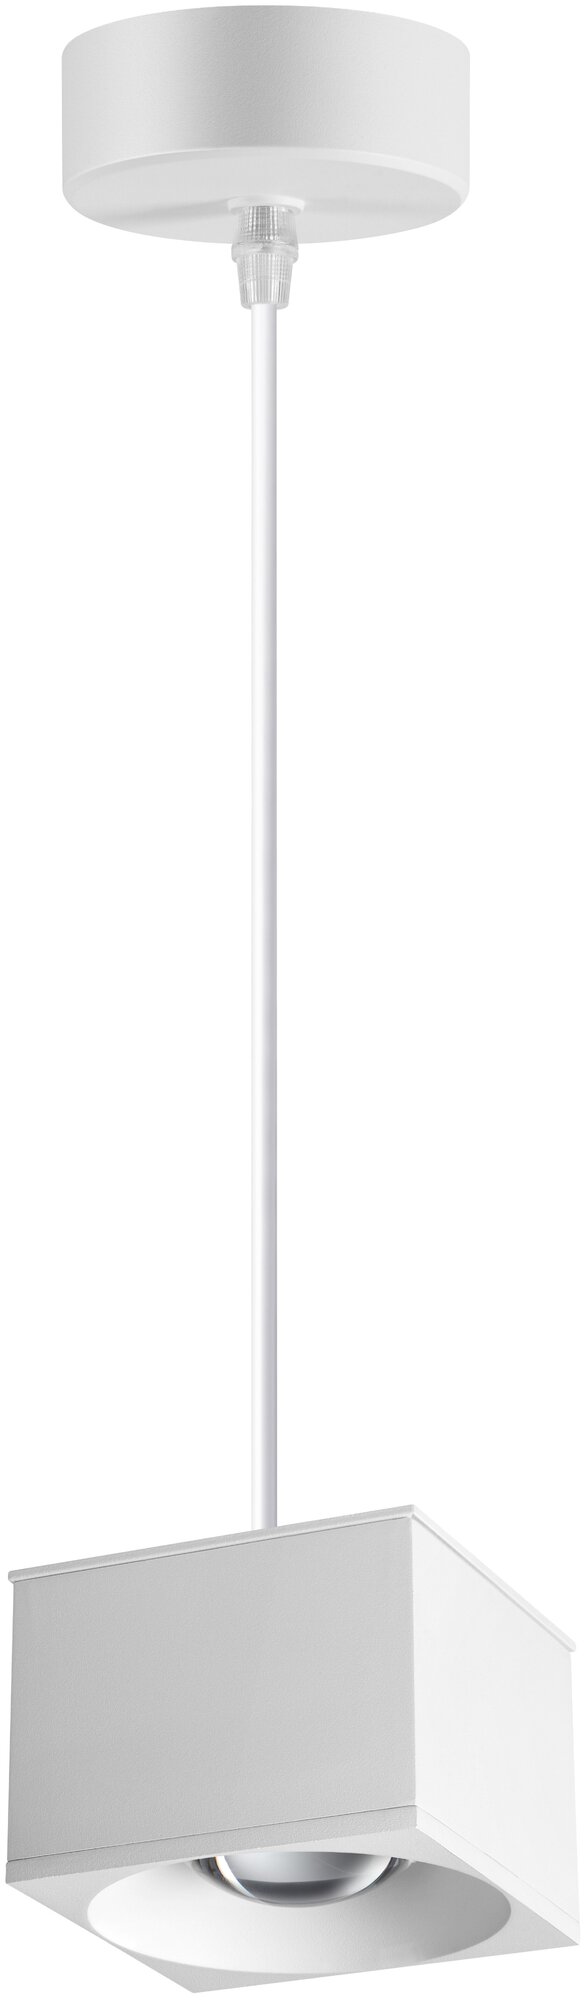 Светильник подвесной Novotech Patera 358657, LED, 12Вт, кол-во ламп:1шт, Белый